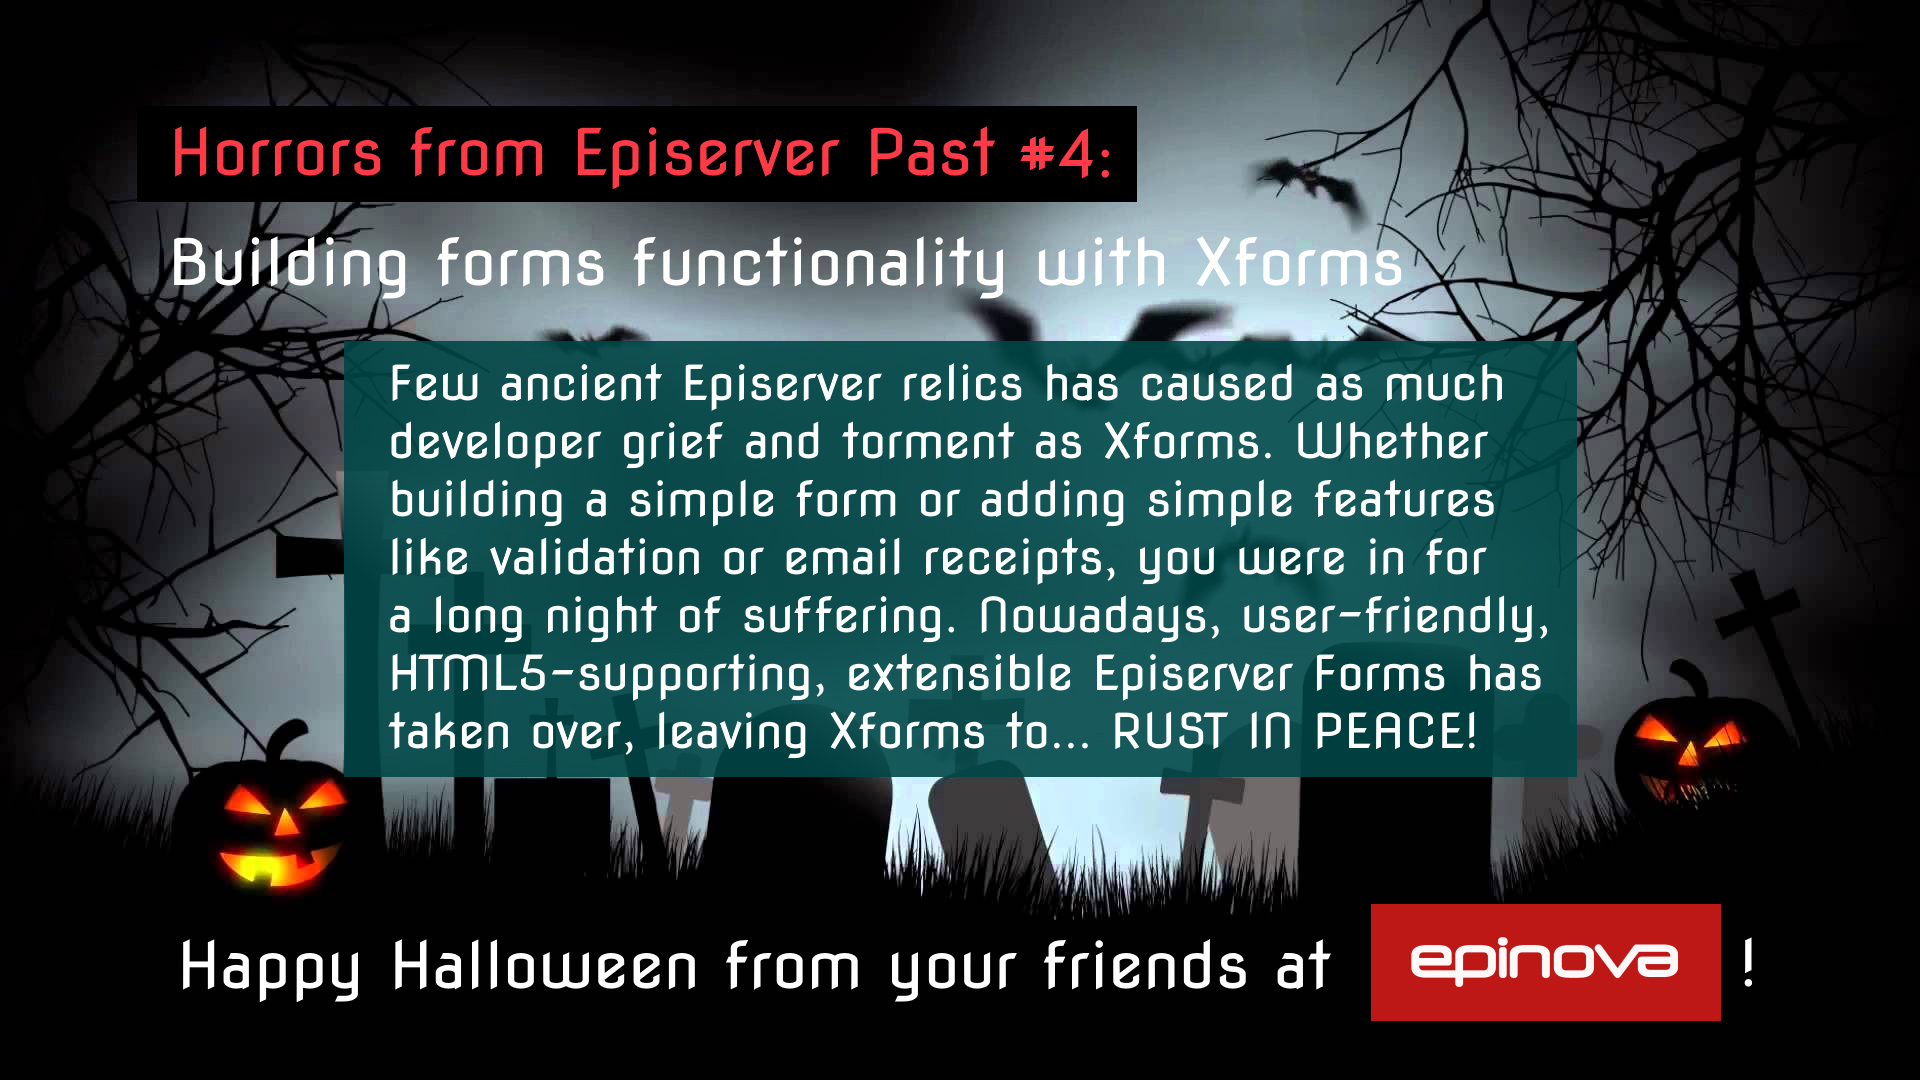 Humorous Halloween throwback to Episerver's XForms builder